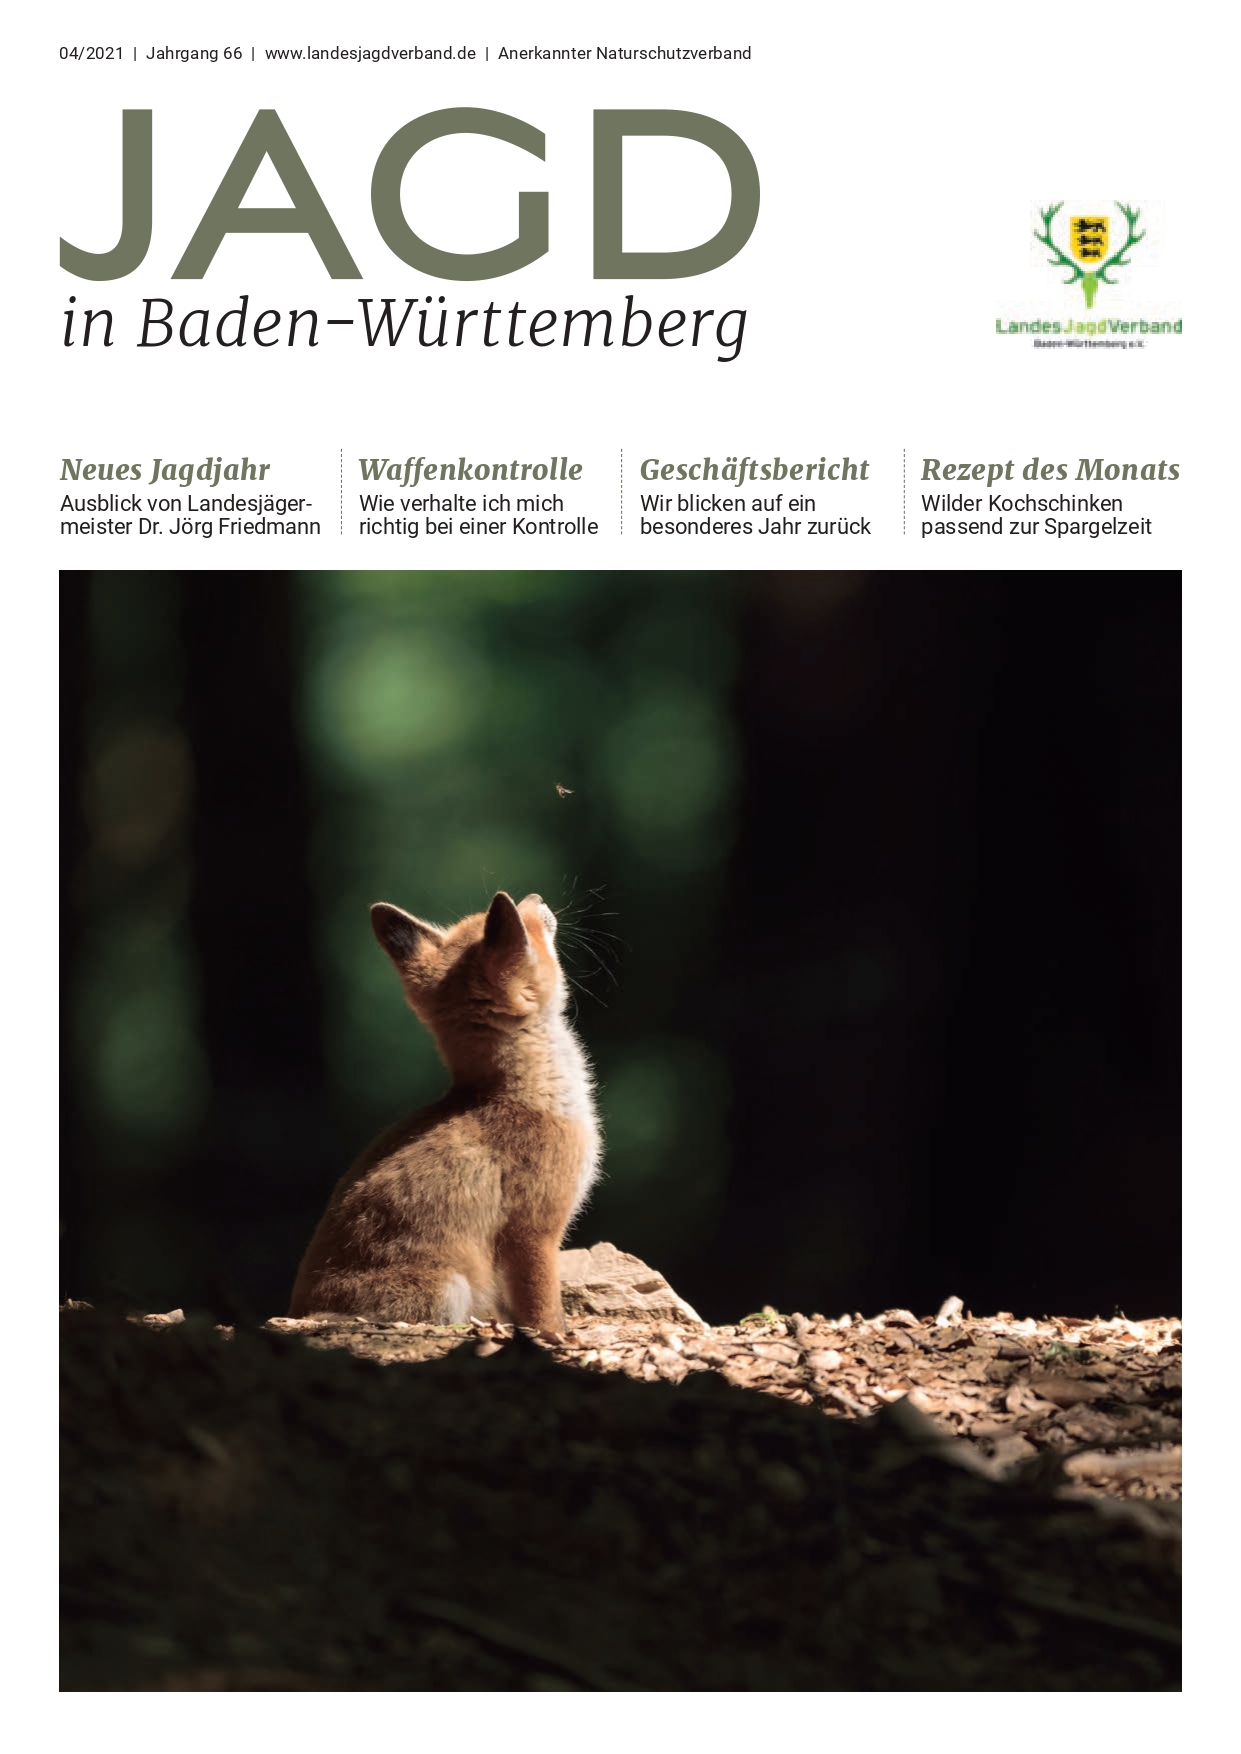 Titelseite der Jagd in Baden-Württemberg Nr. 4/2021